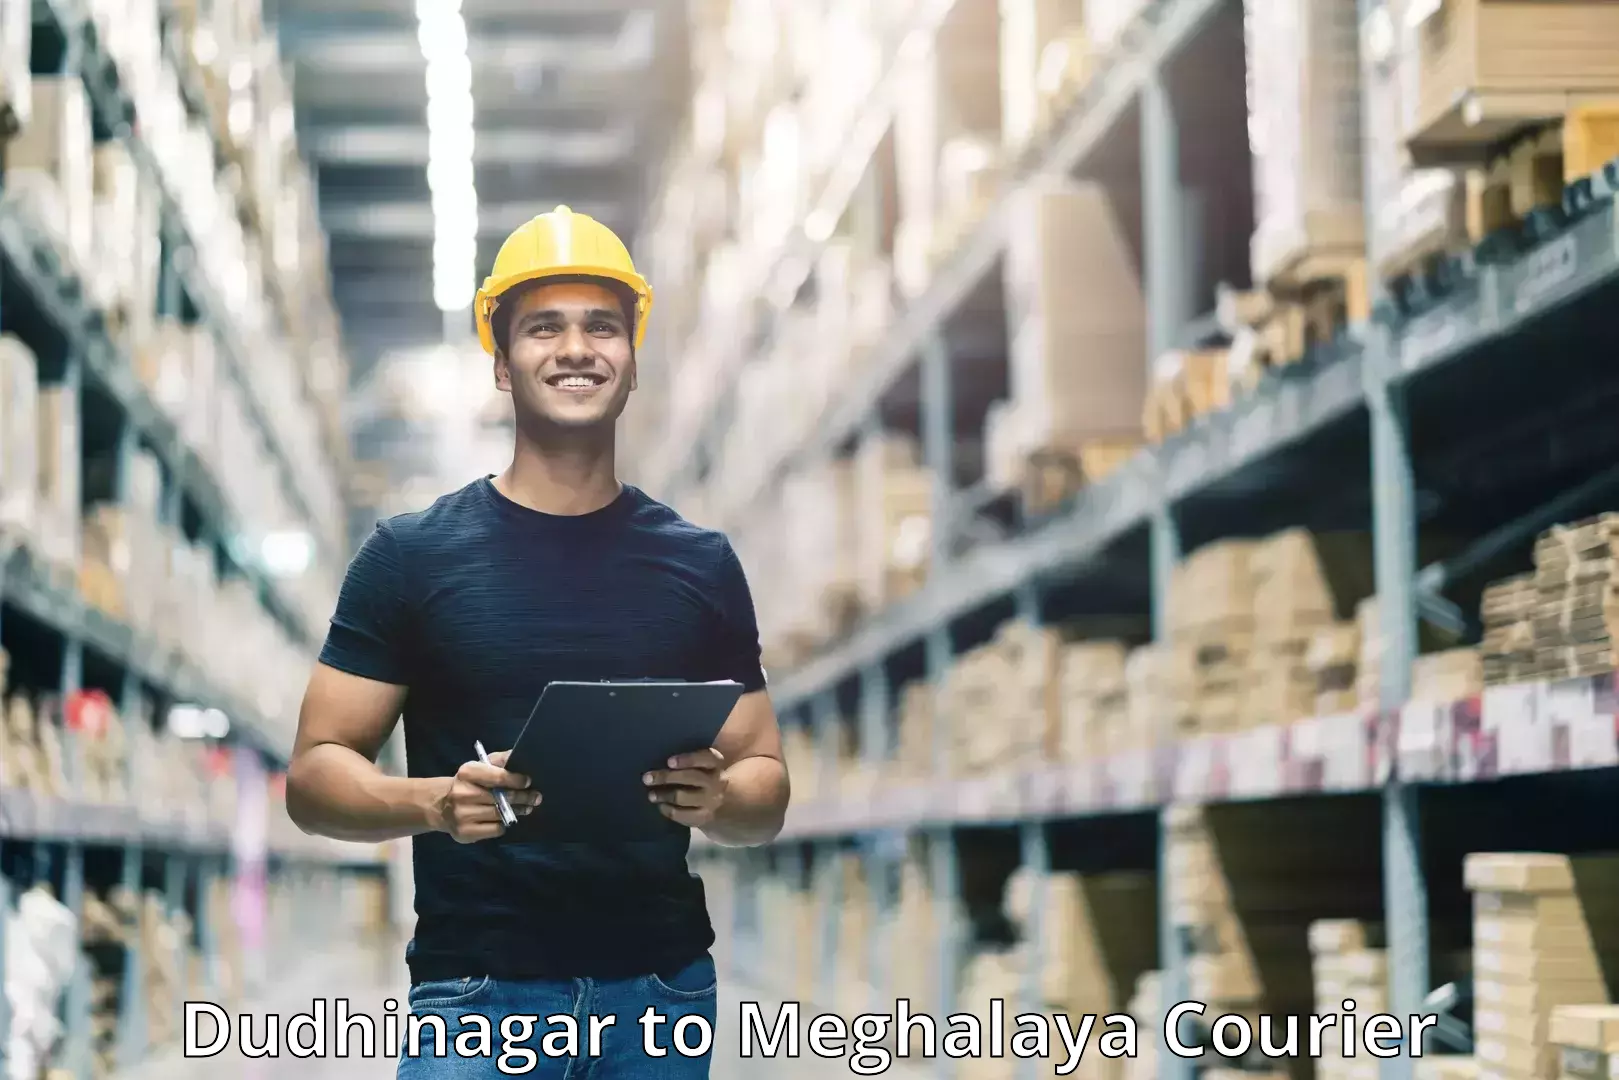 Delivery service partnership Dudhinagar to Meghalaya